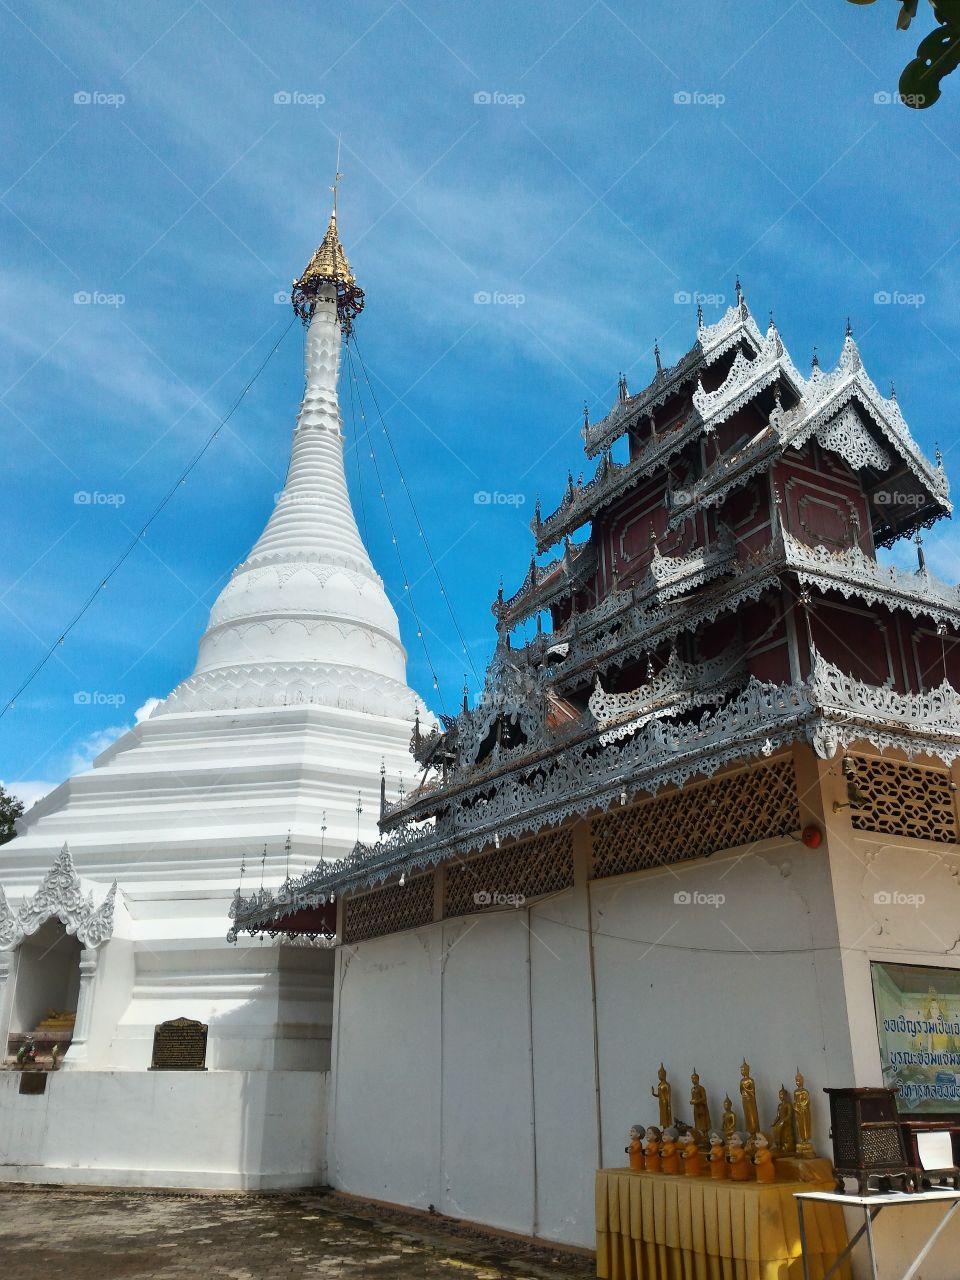 Architecture, Temple, Religion, Travel, Buddha